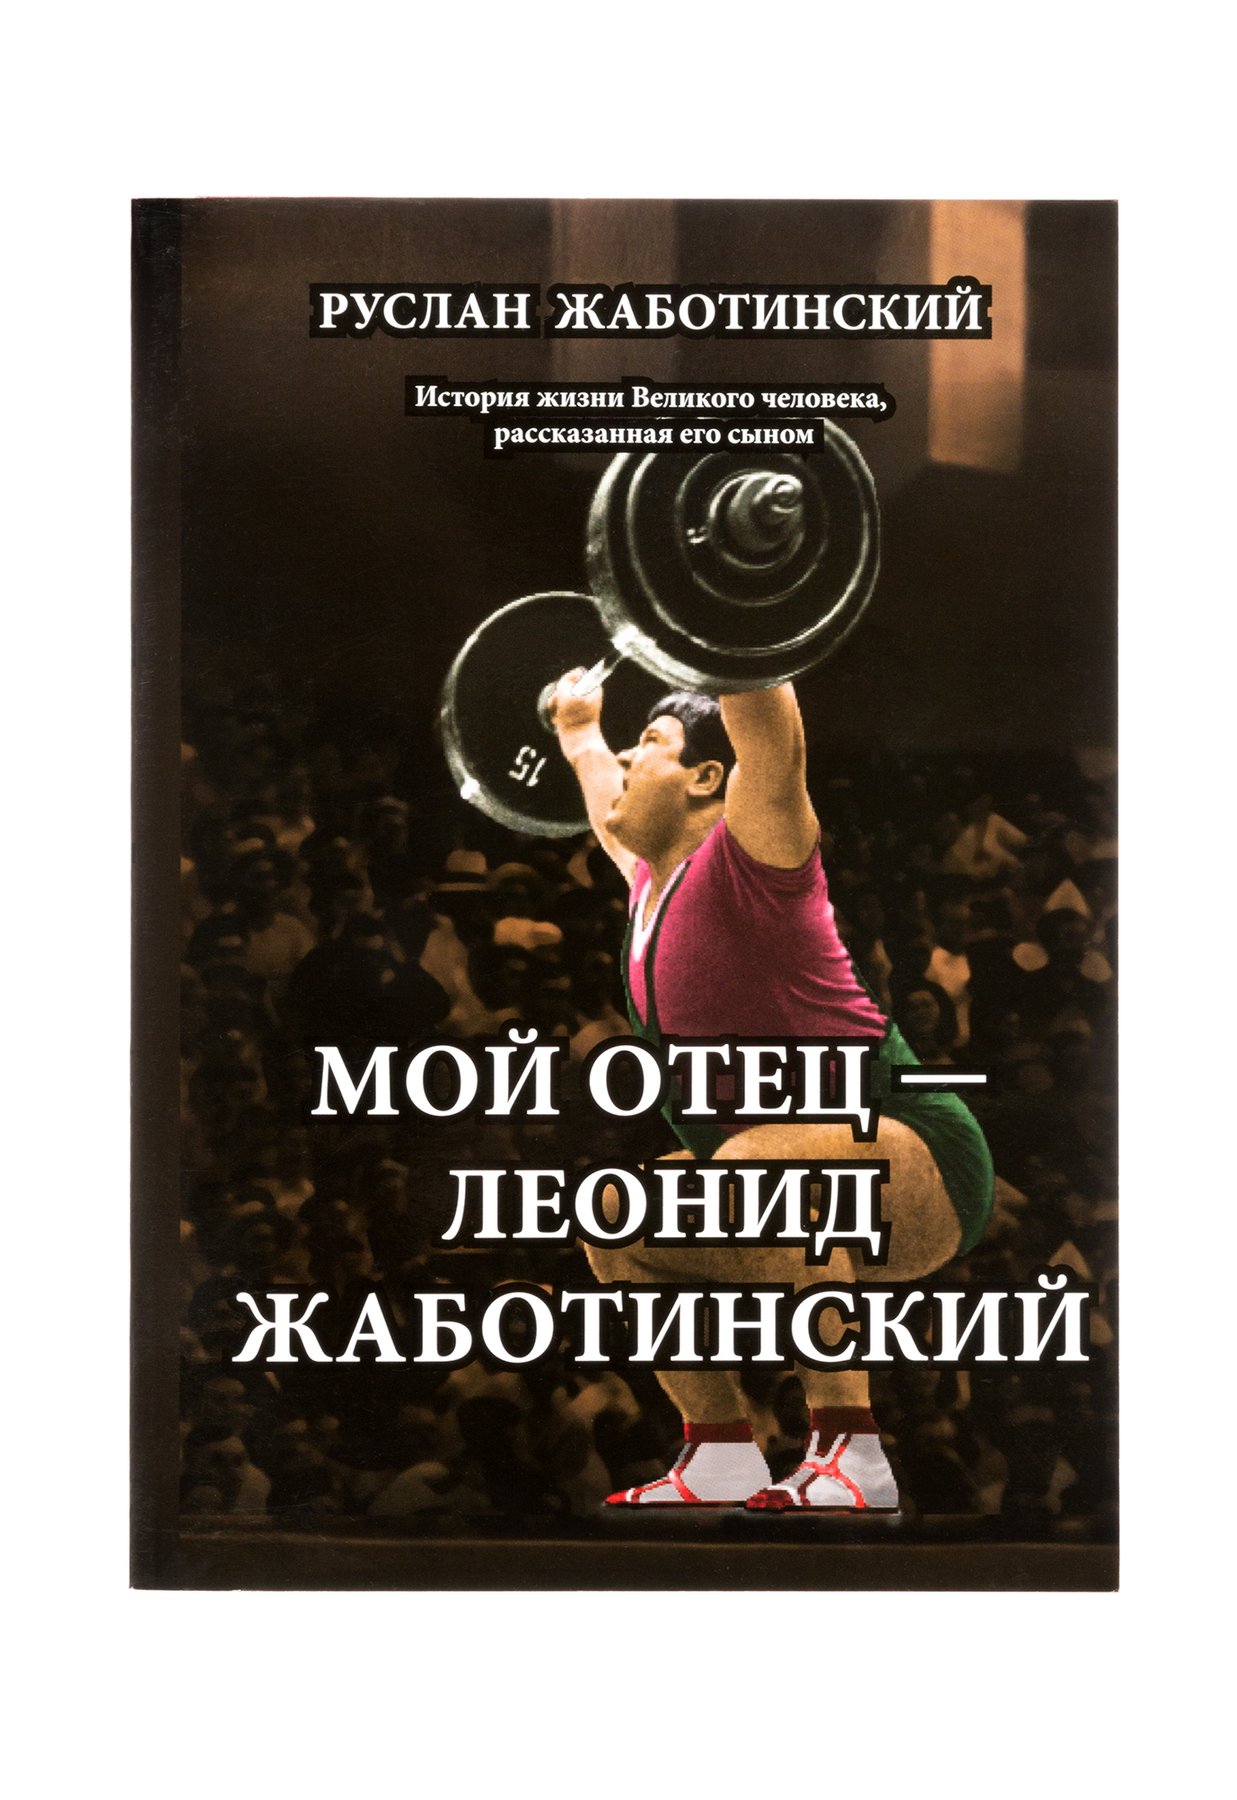 Книга Мой отец Леонид Жаботинский, печатная версия